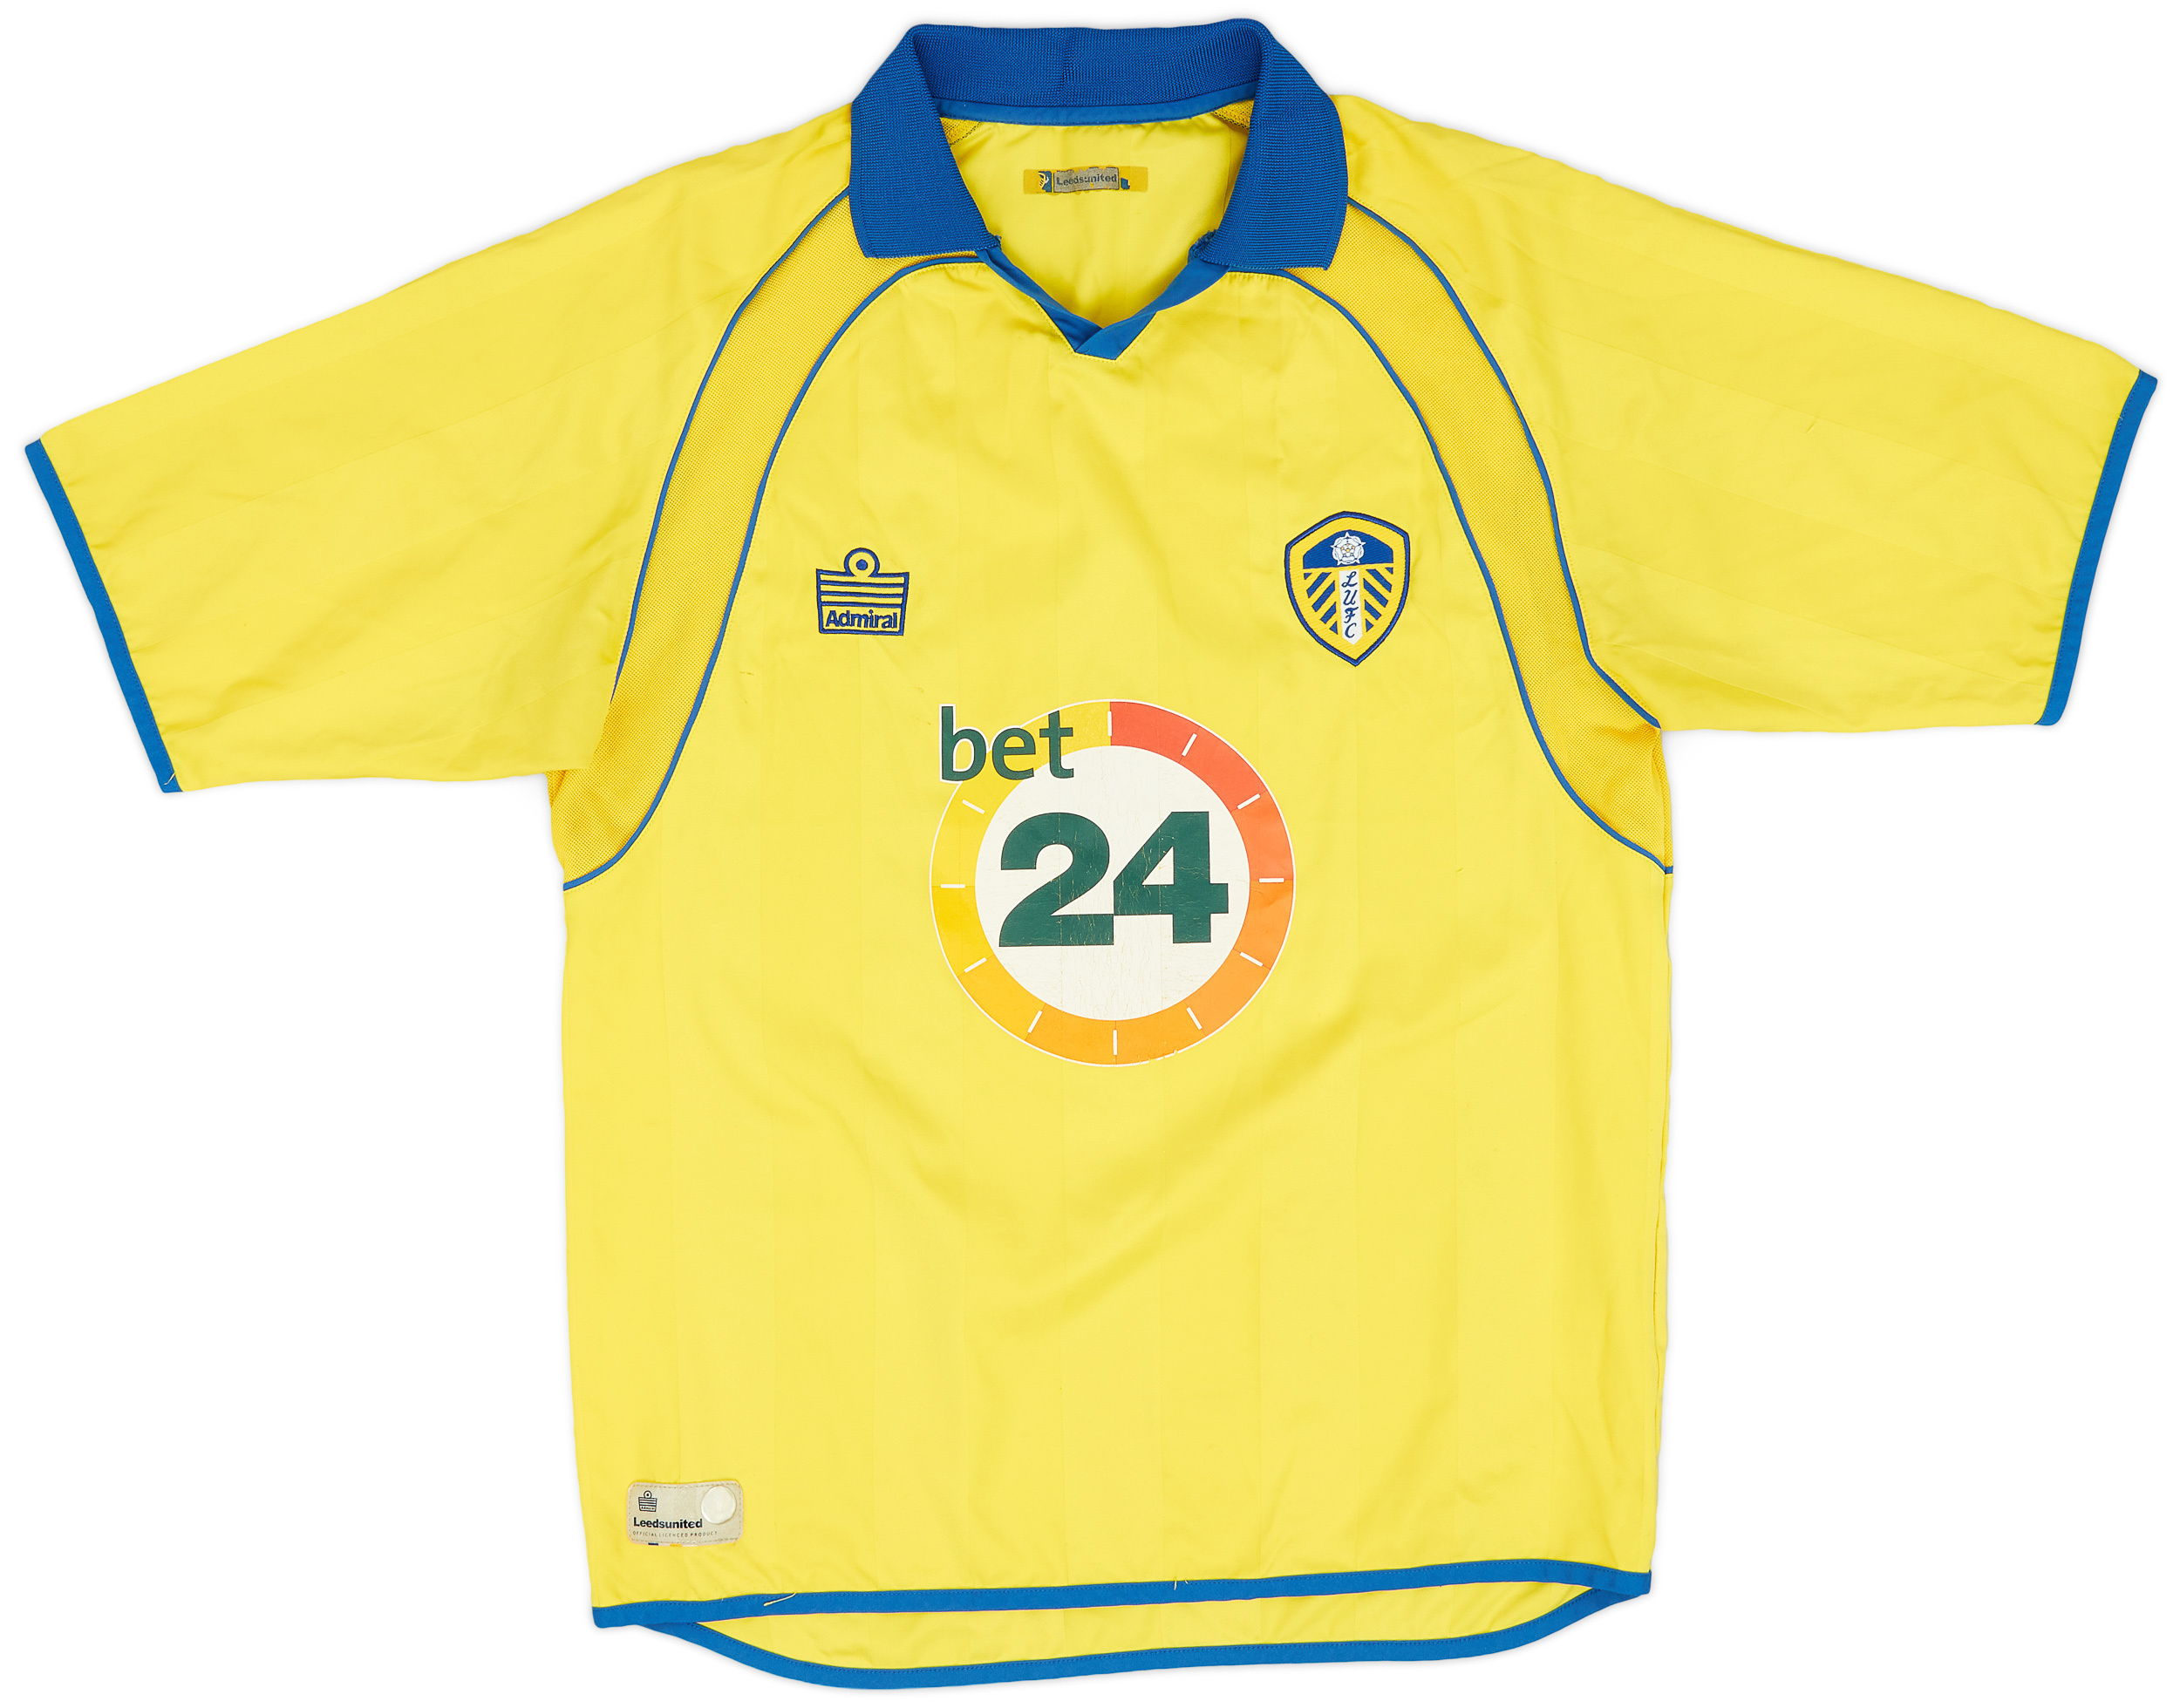 2006-07 Leeds United Away Shirt - 6/10 - ()